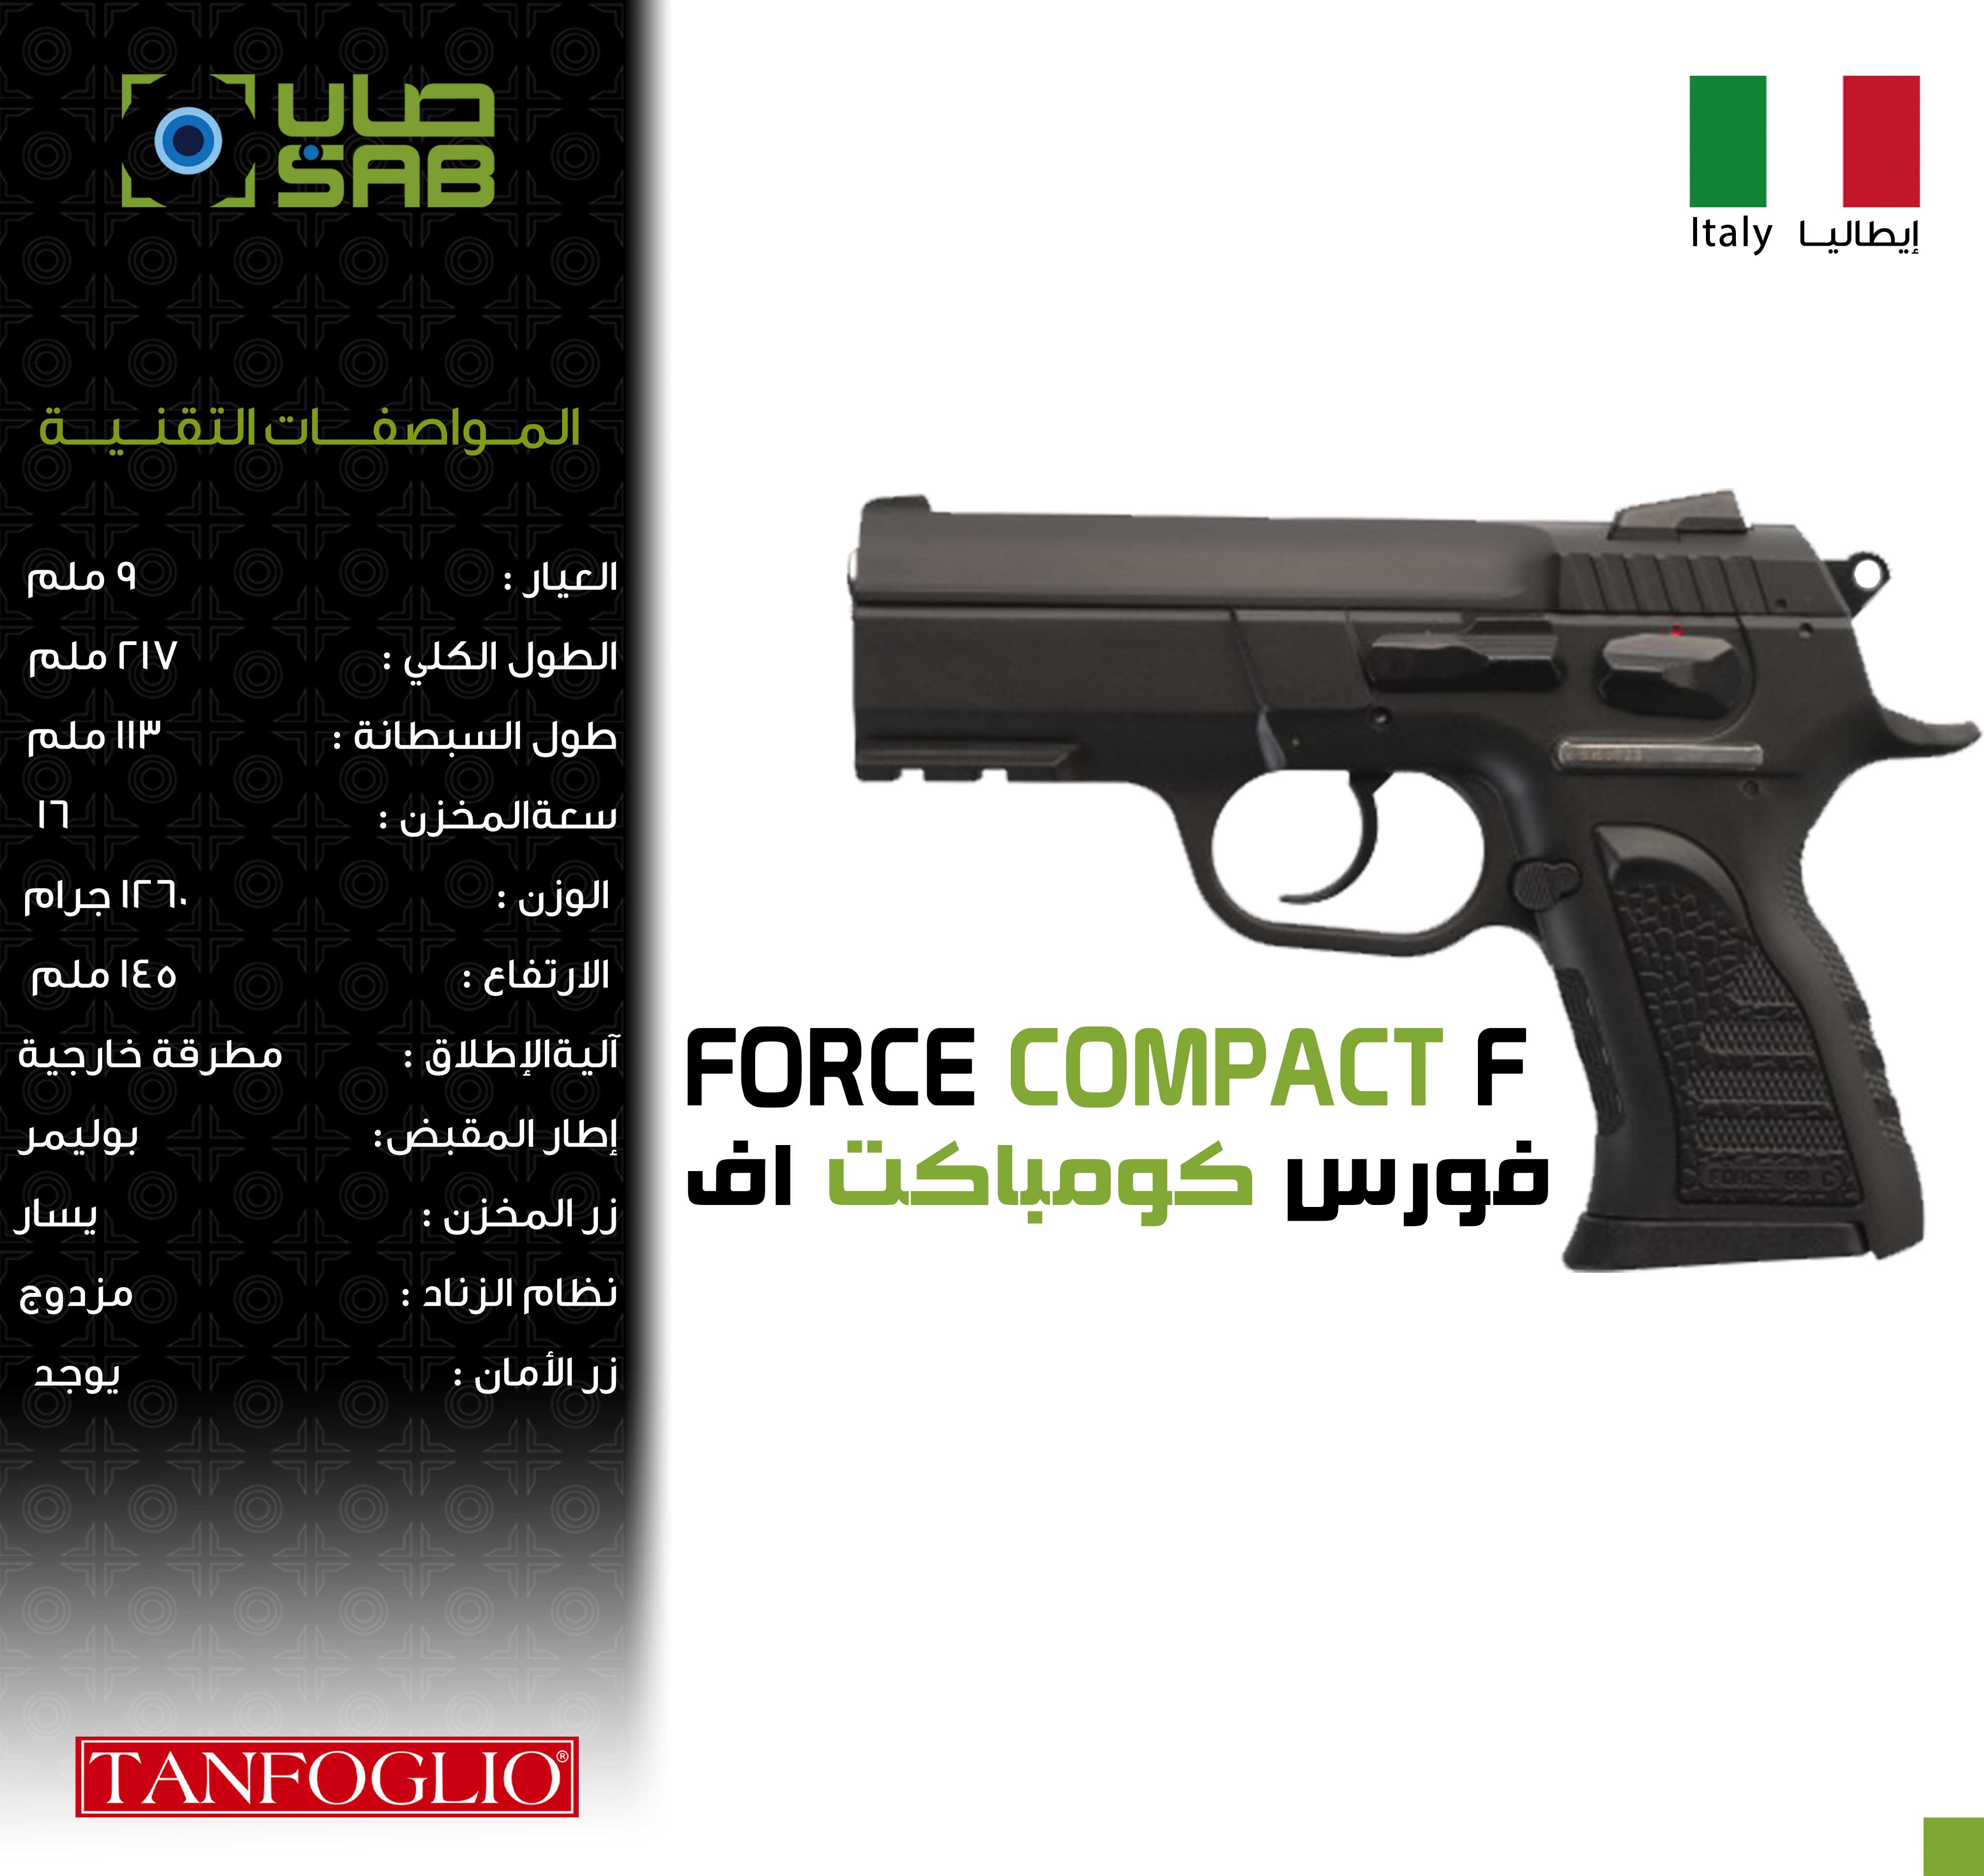 9mm - Tanfoglio - FORCE COMPACT F